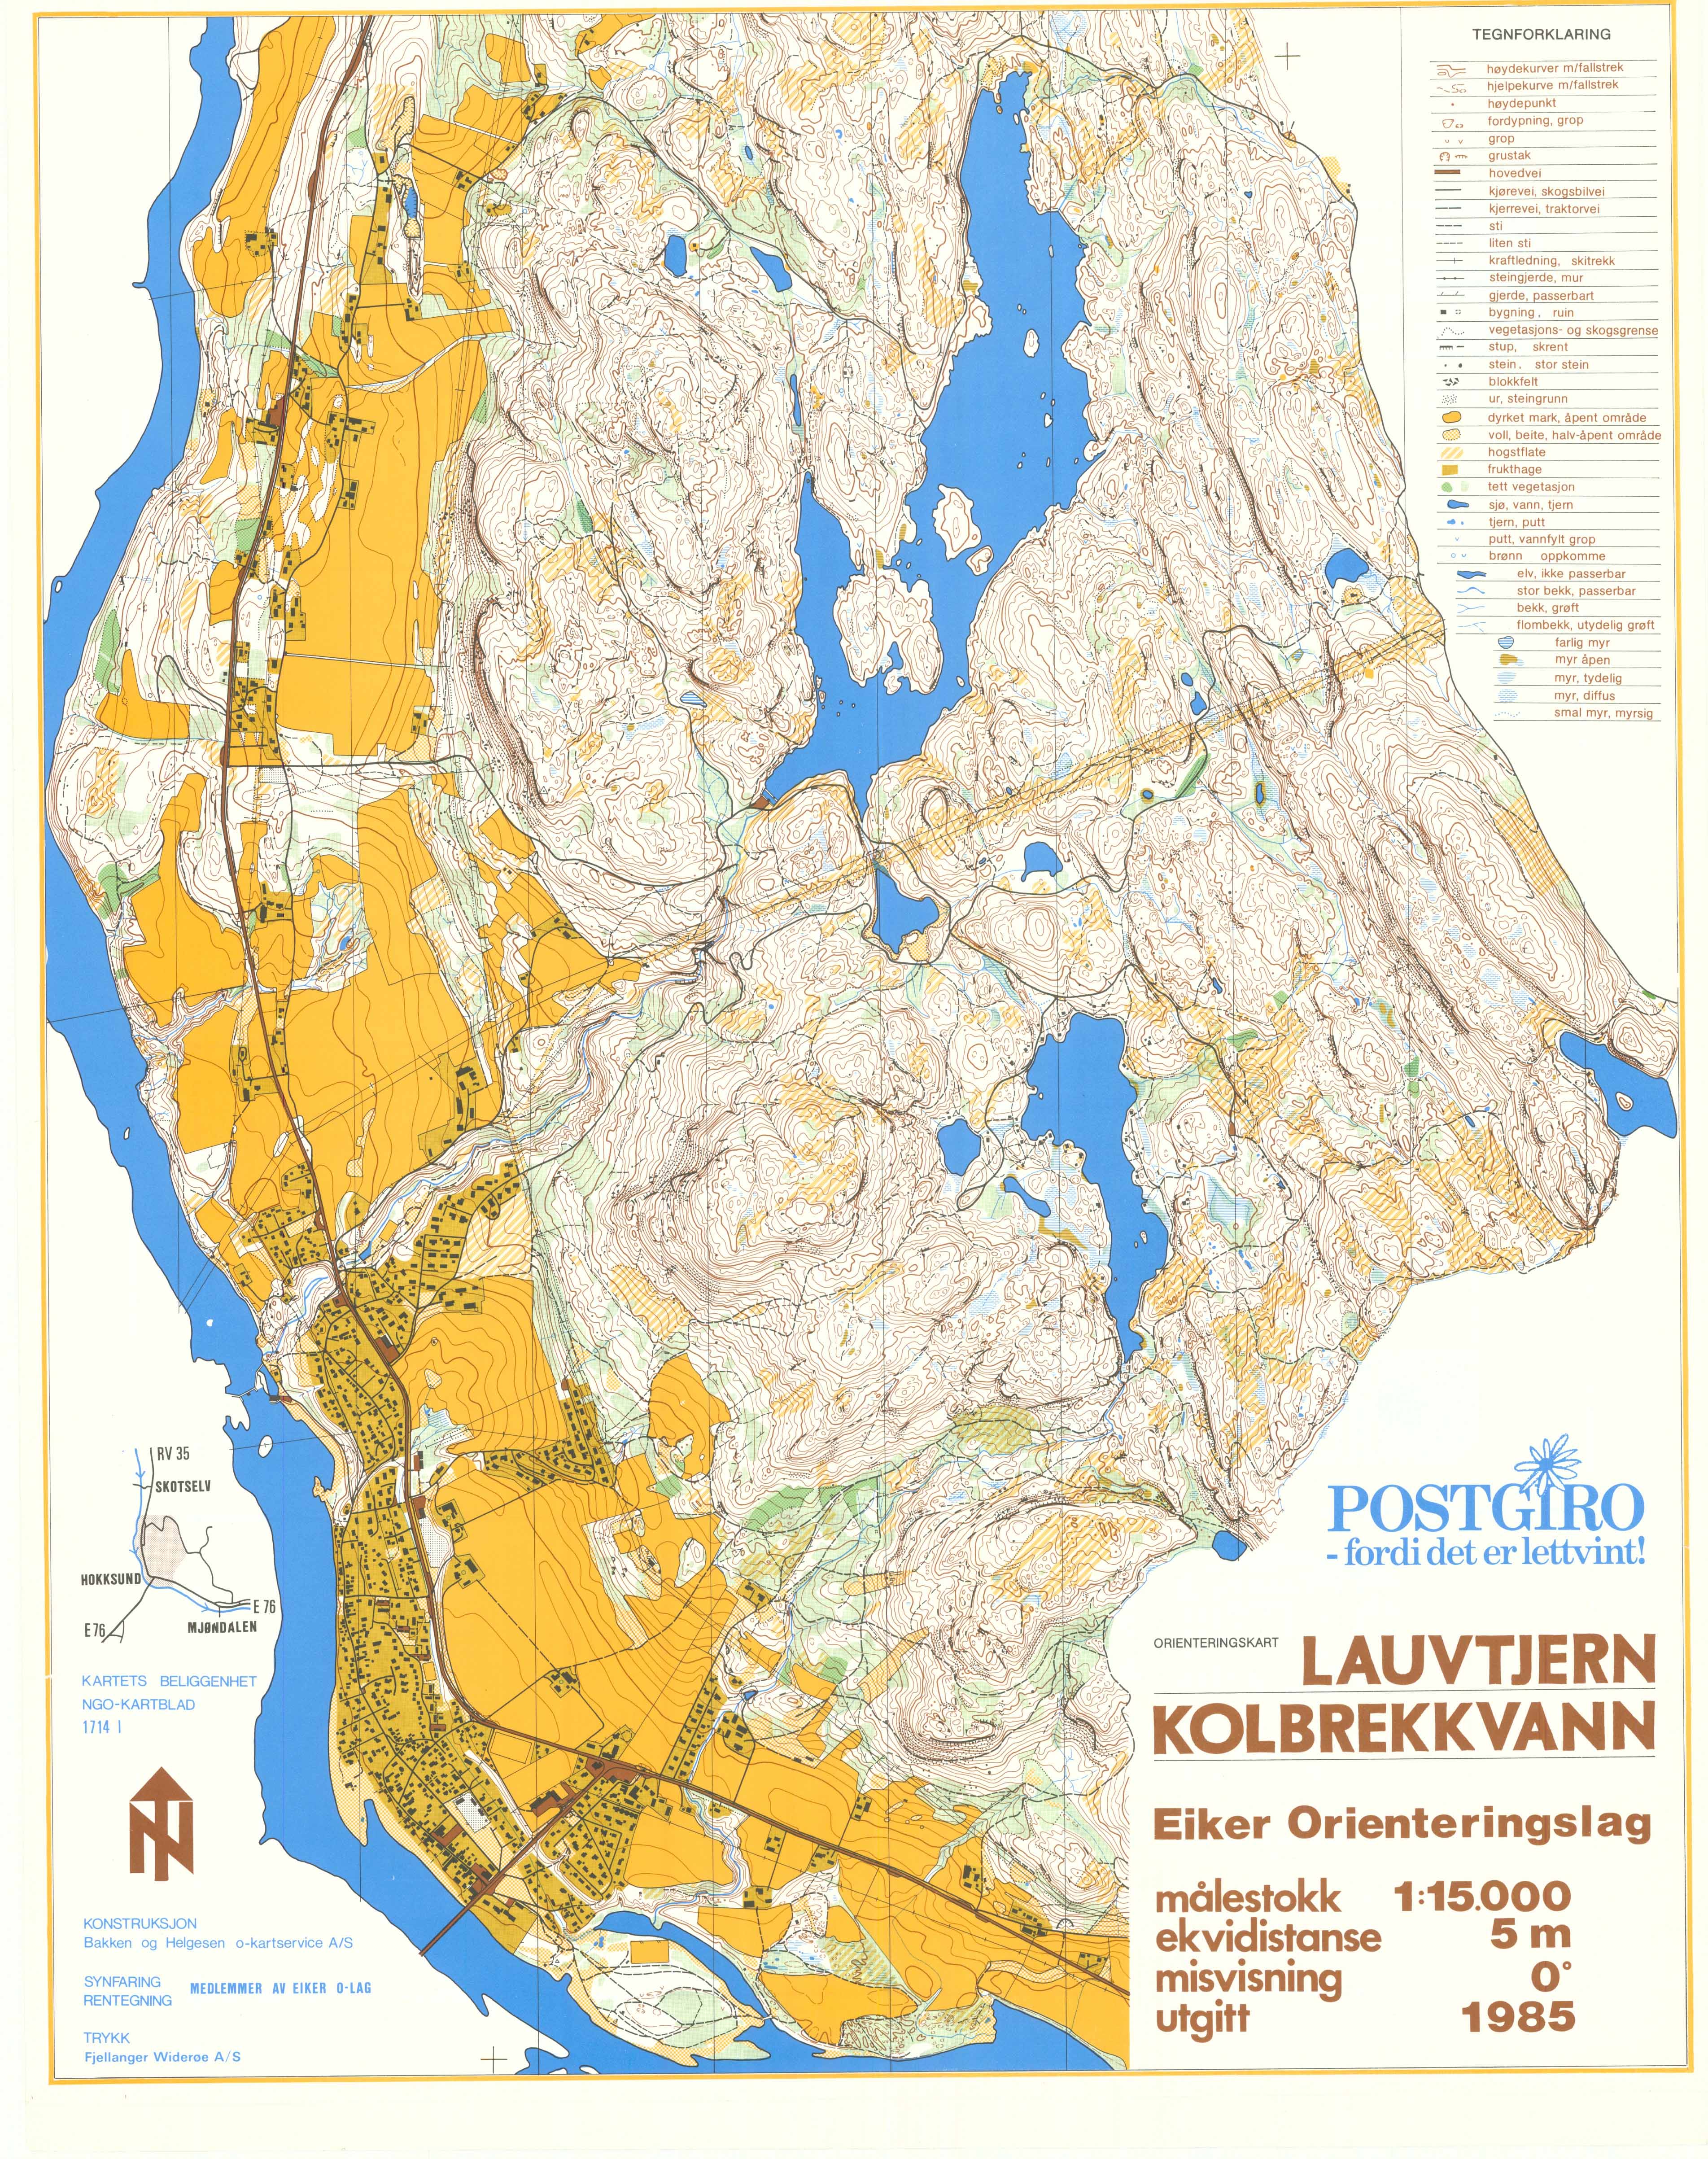 Lauvtjern - Kolbrekkvann (01/01/1985)